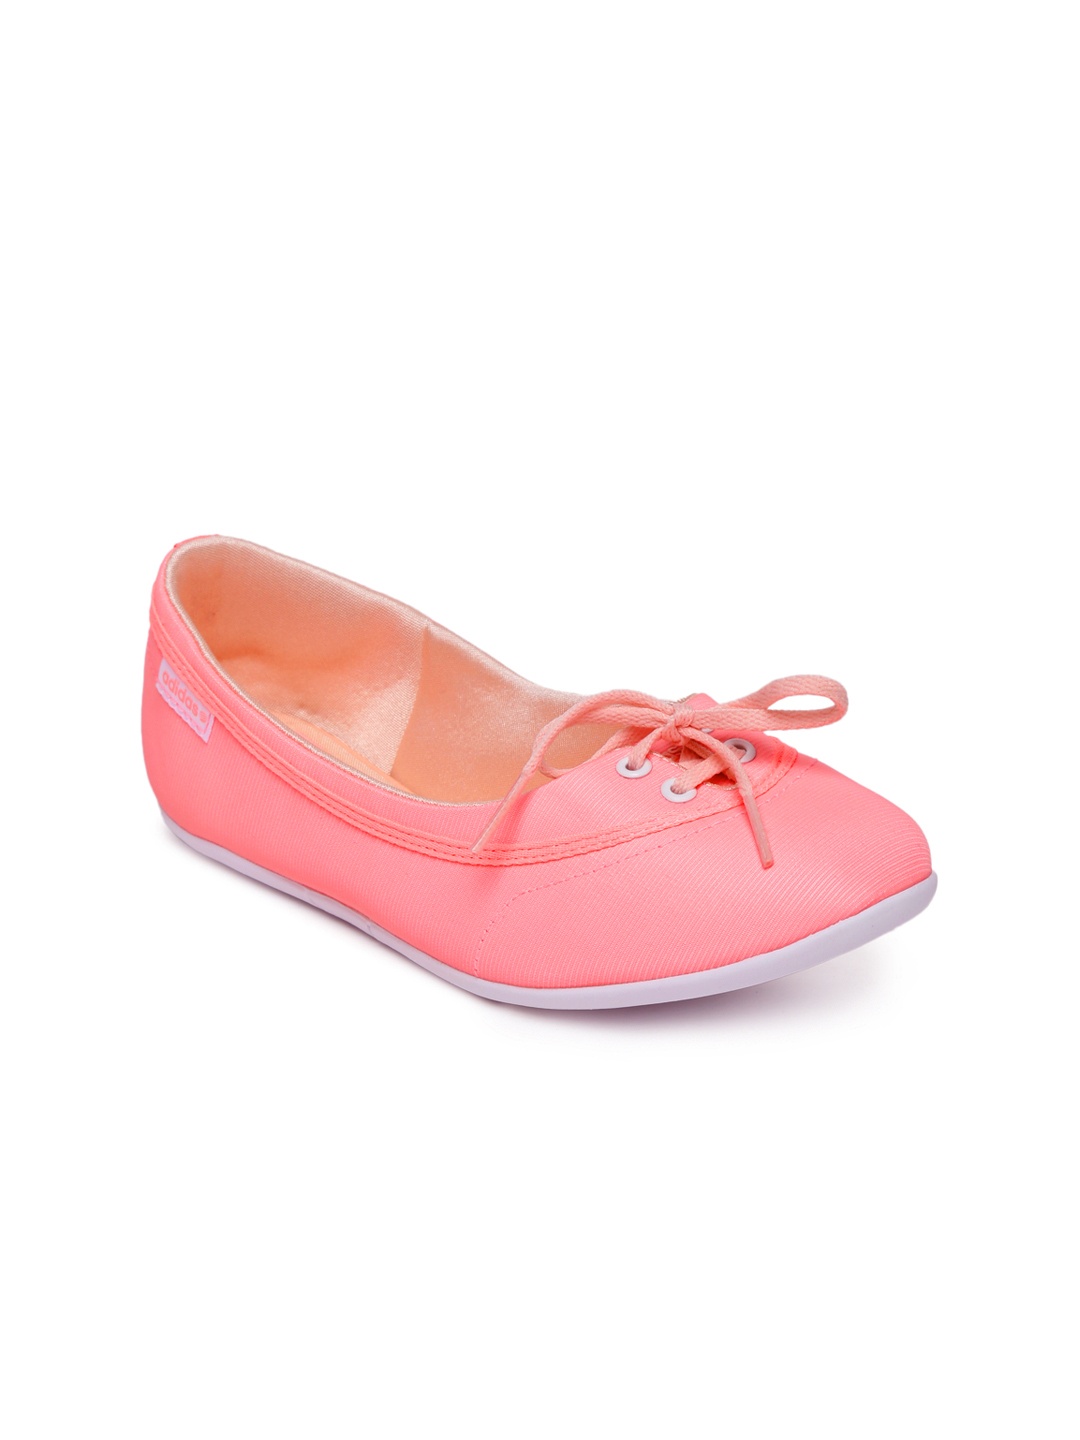 Myntra Adidas NEO Women Neon Pink Flat Shoes 655767 | Buy Myntra Adidas ...